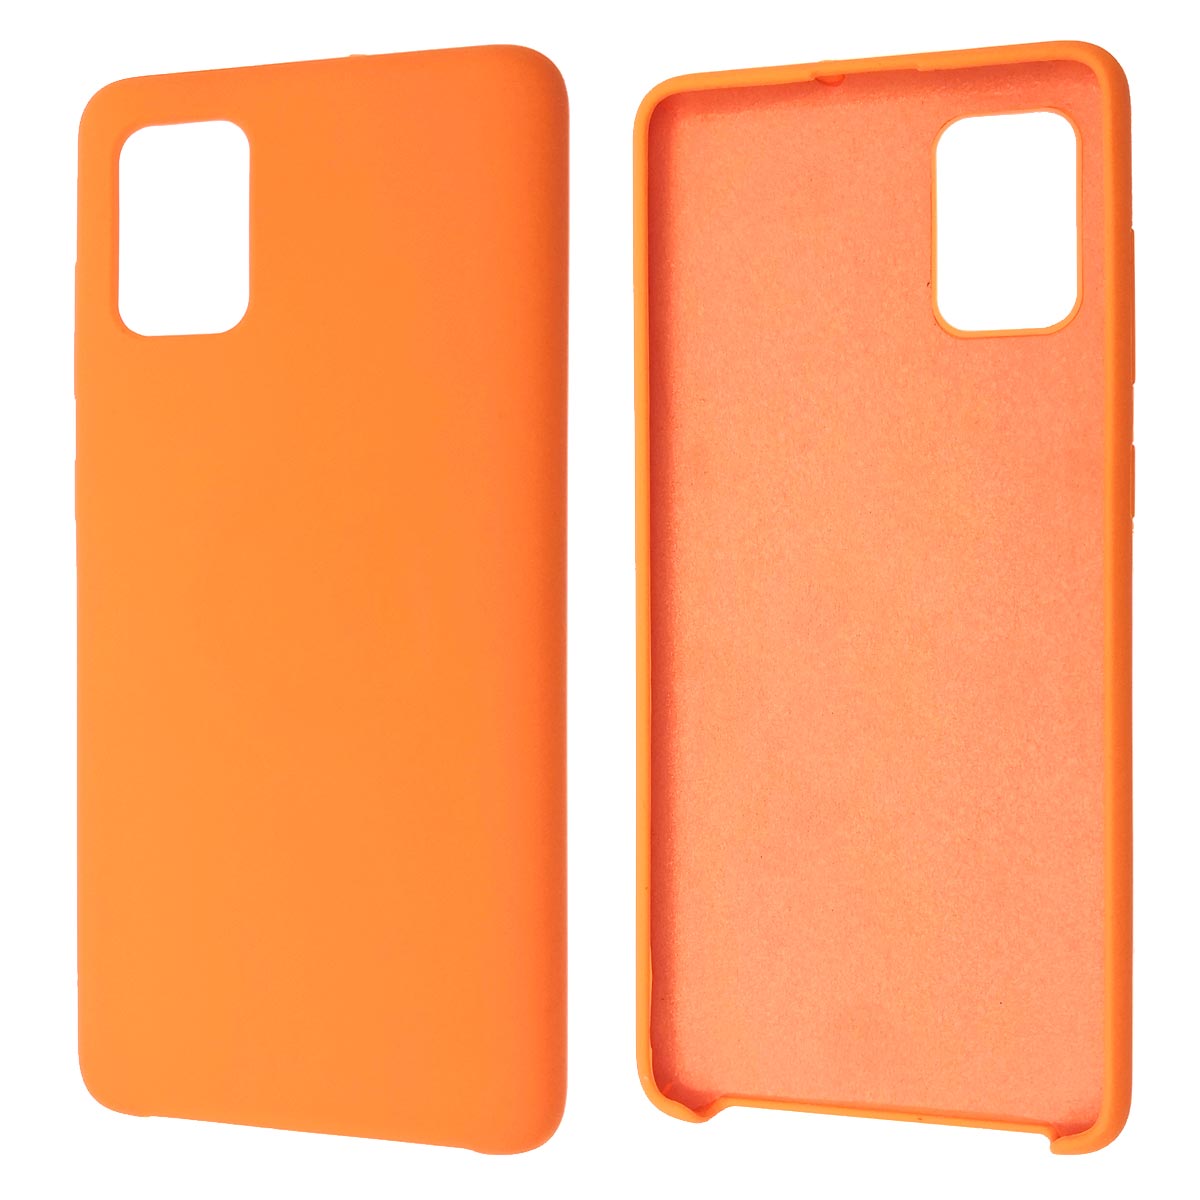 Чехол накладка Silicon Cover для SAMSUNG Galaxy A71 (SM-A715), силикон, бархат, цвет оранжевый